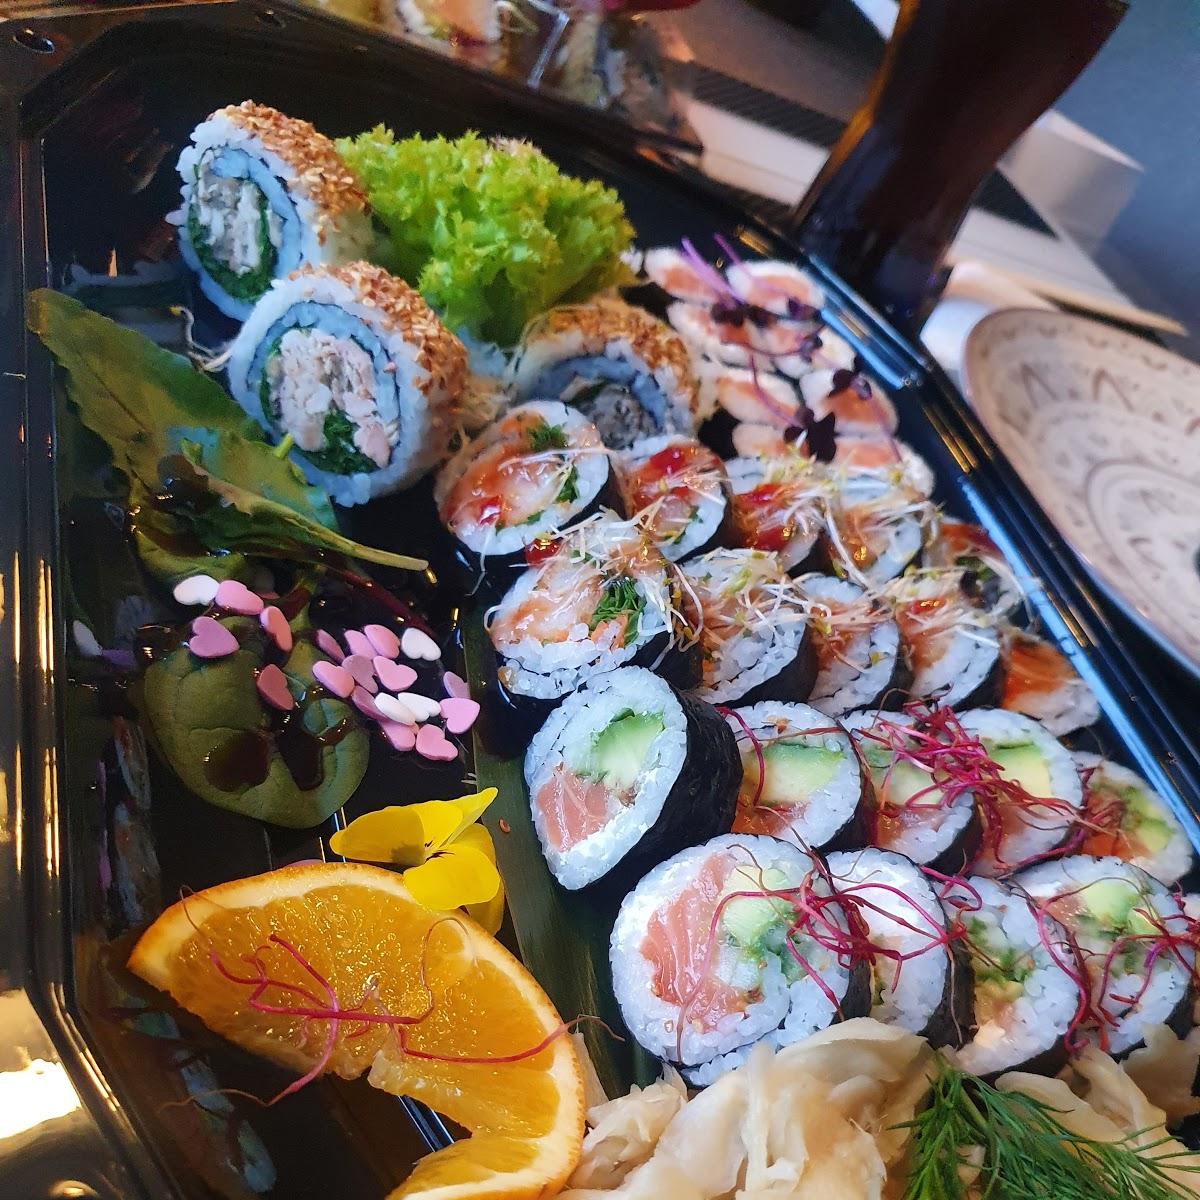 Restaurant "Sushi Love" in Hamburg